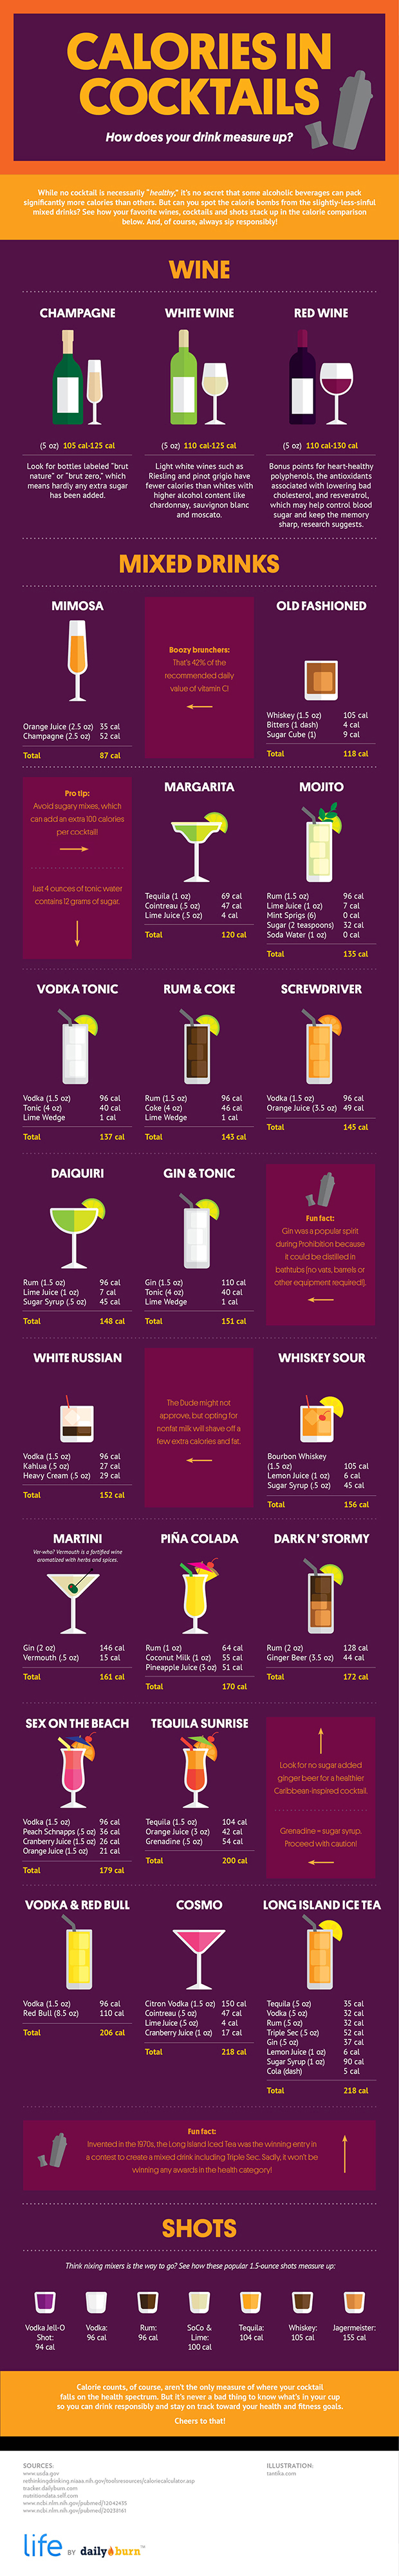 cocktail calories infographic